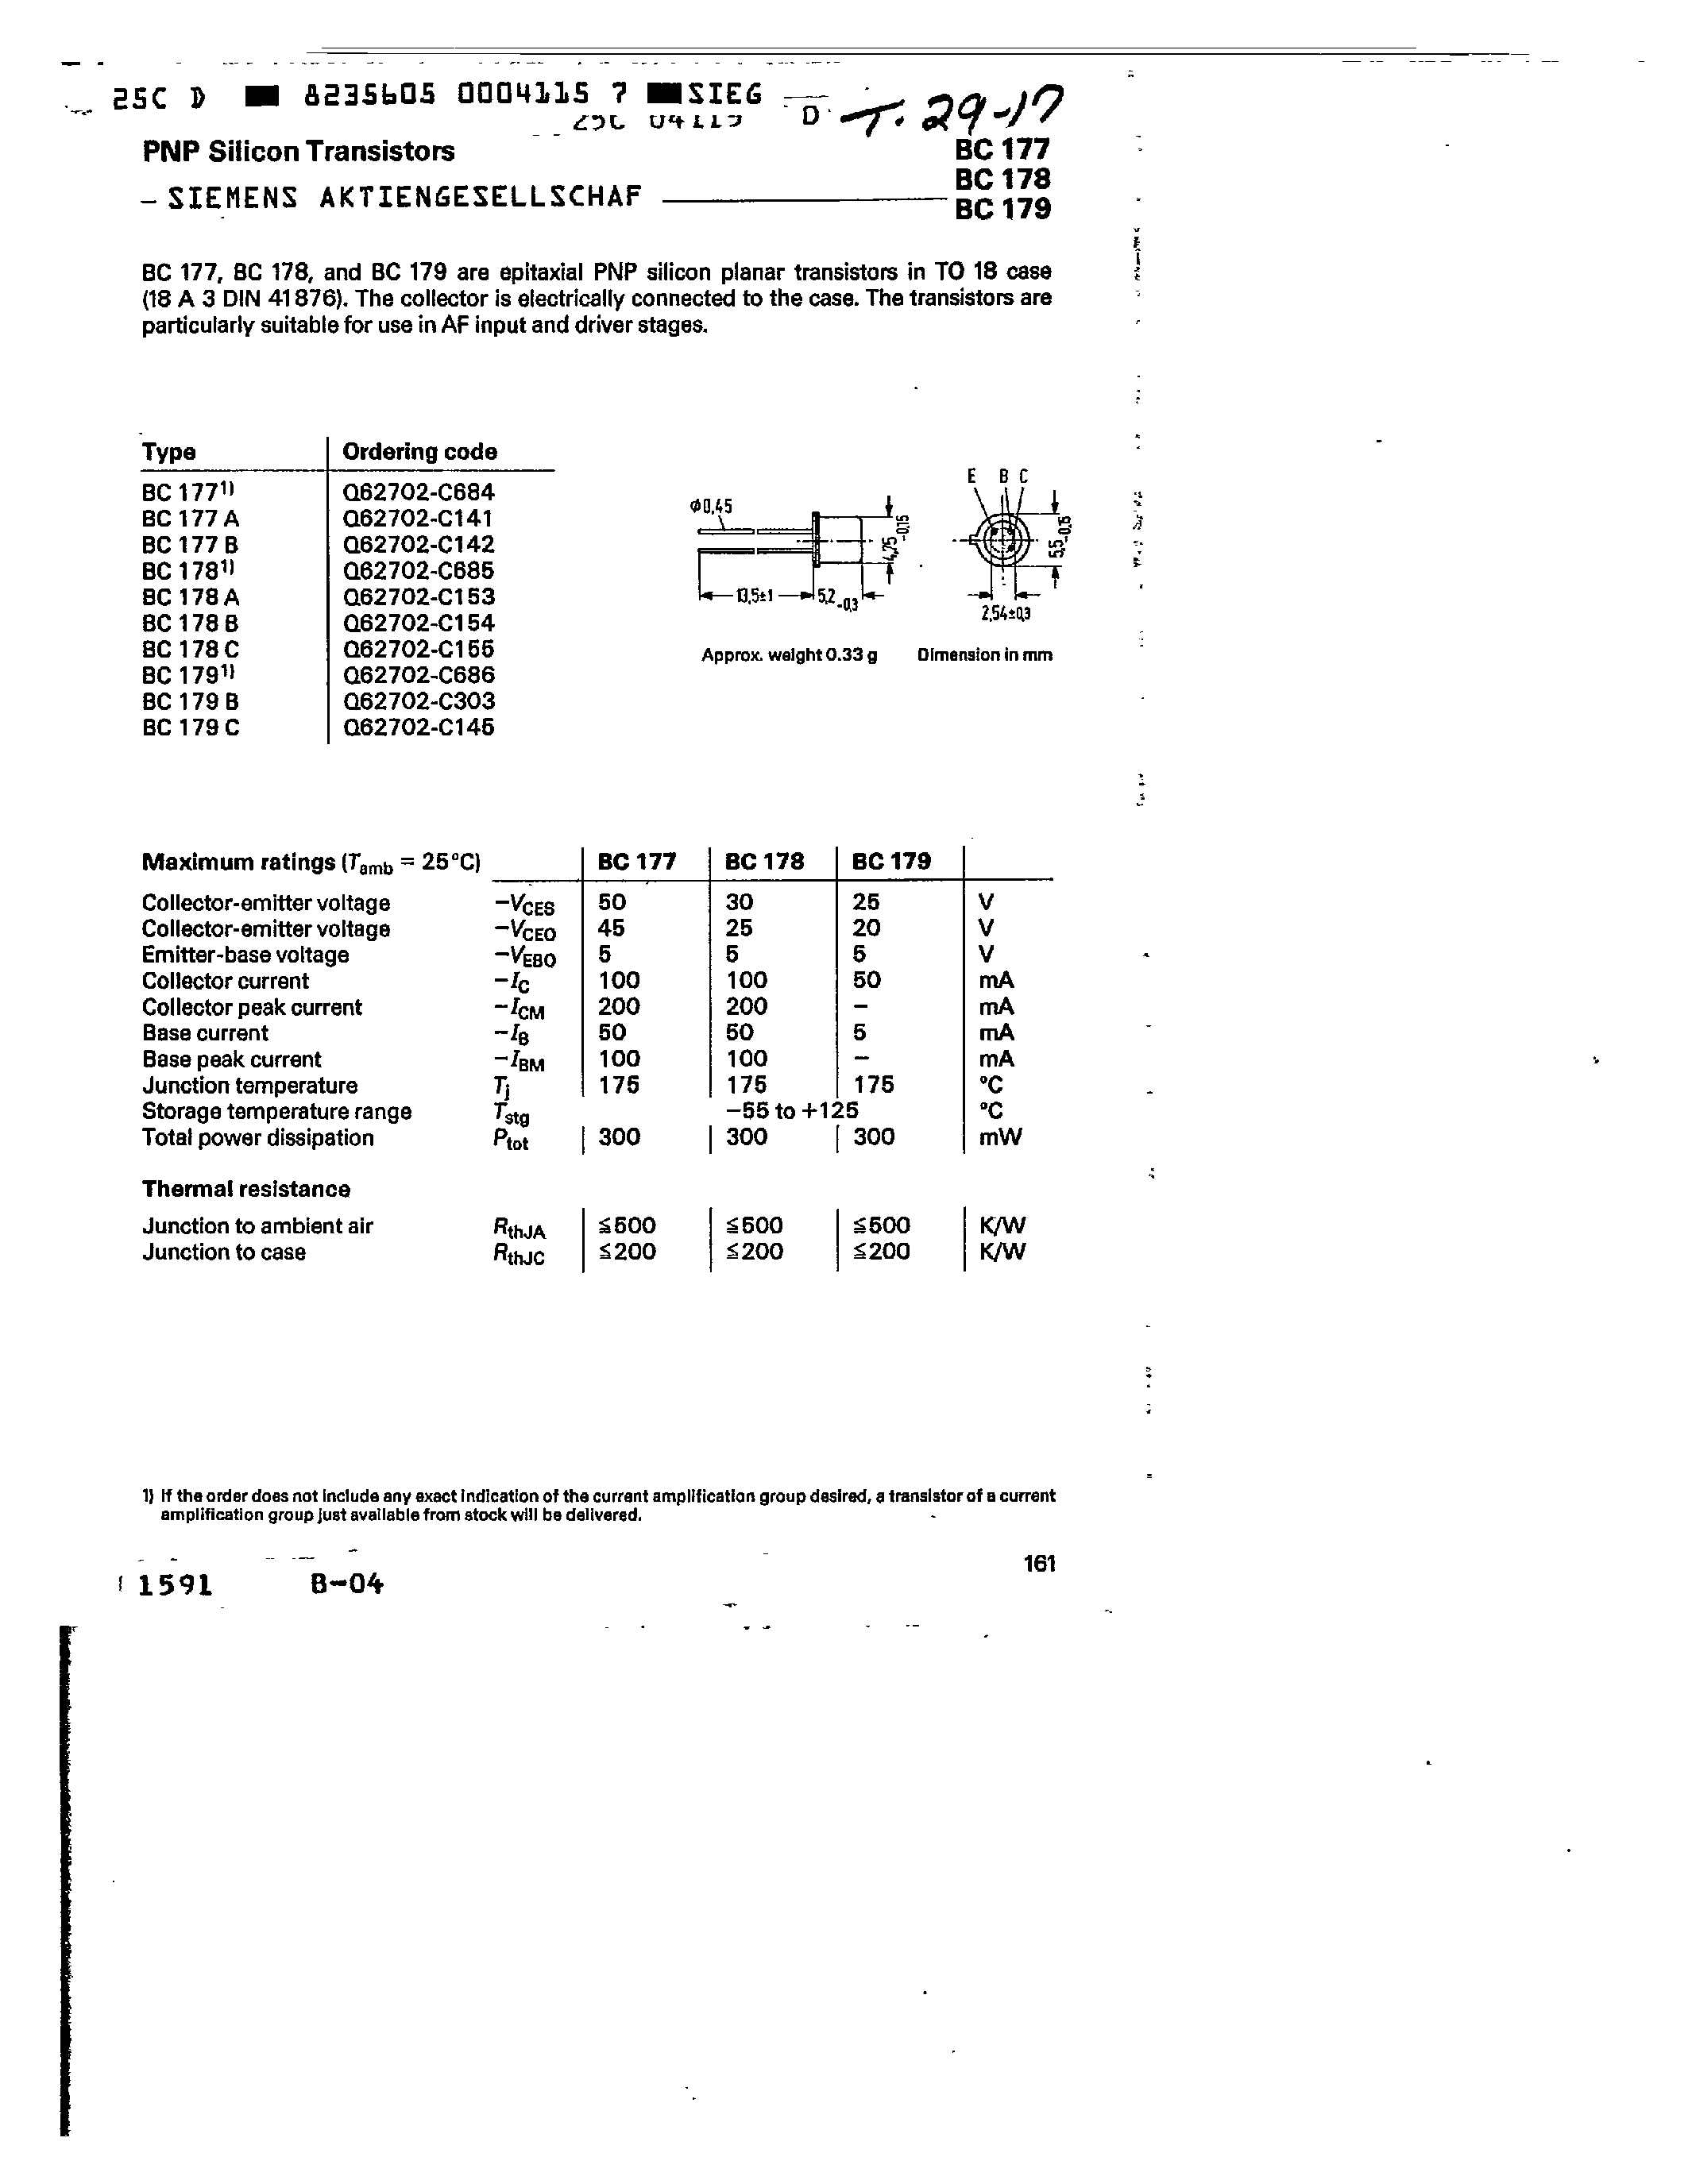 Datasheet BC179C - PNP SILICON TRANSISTORS page 1